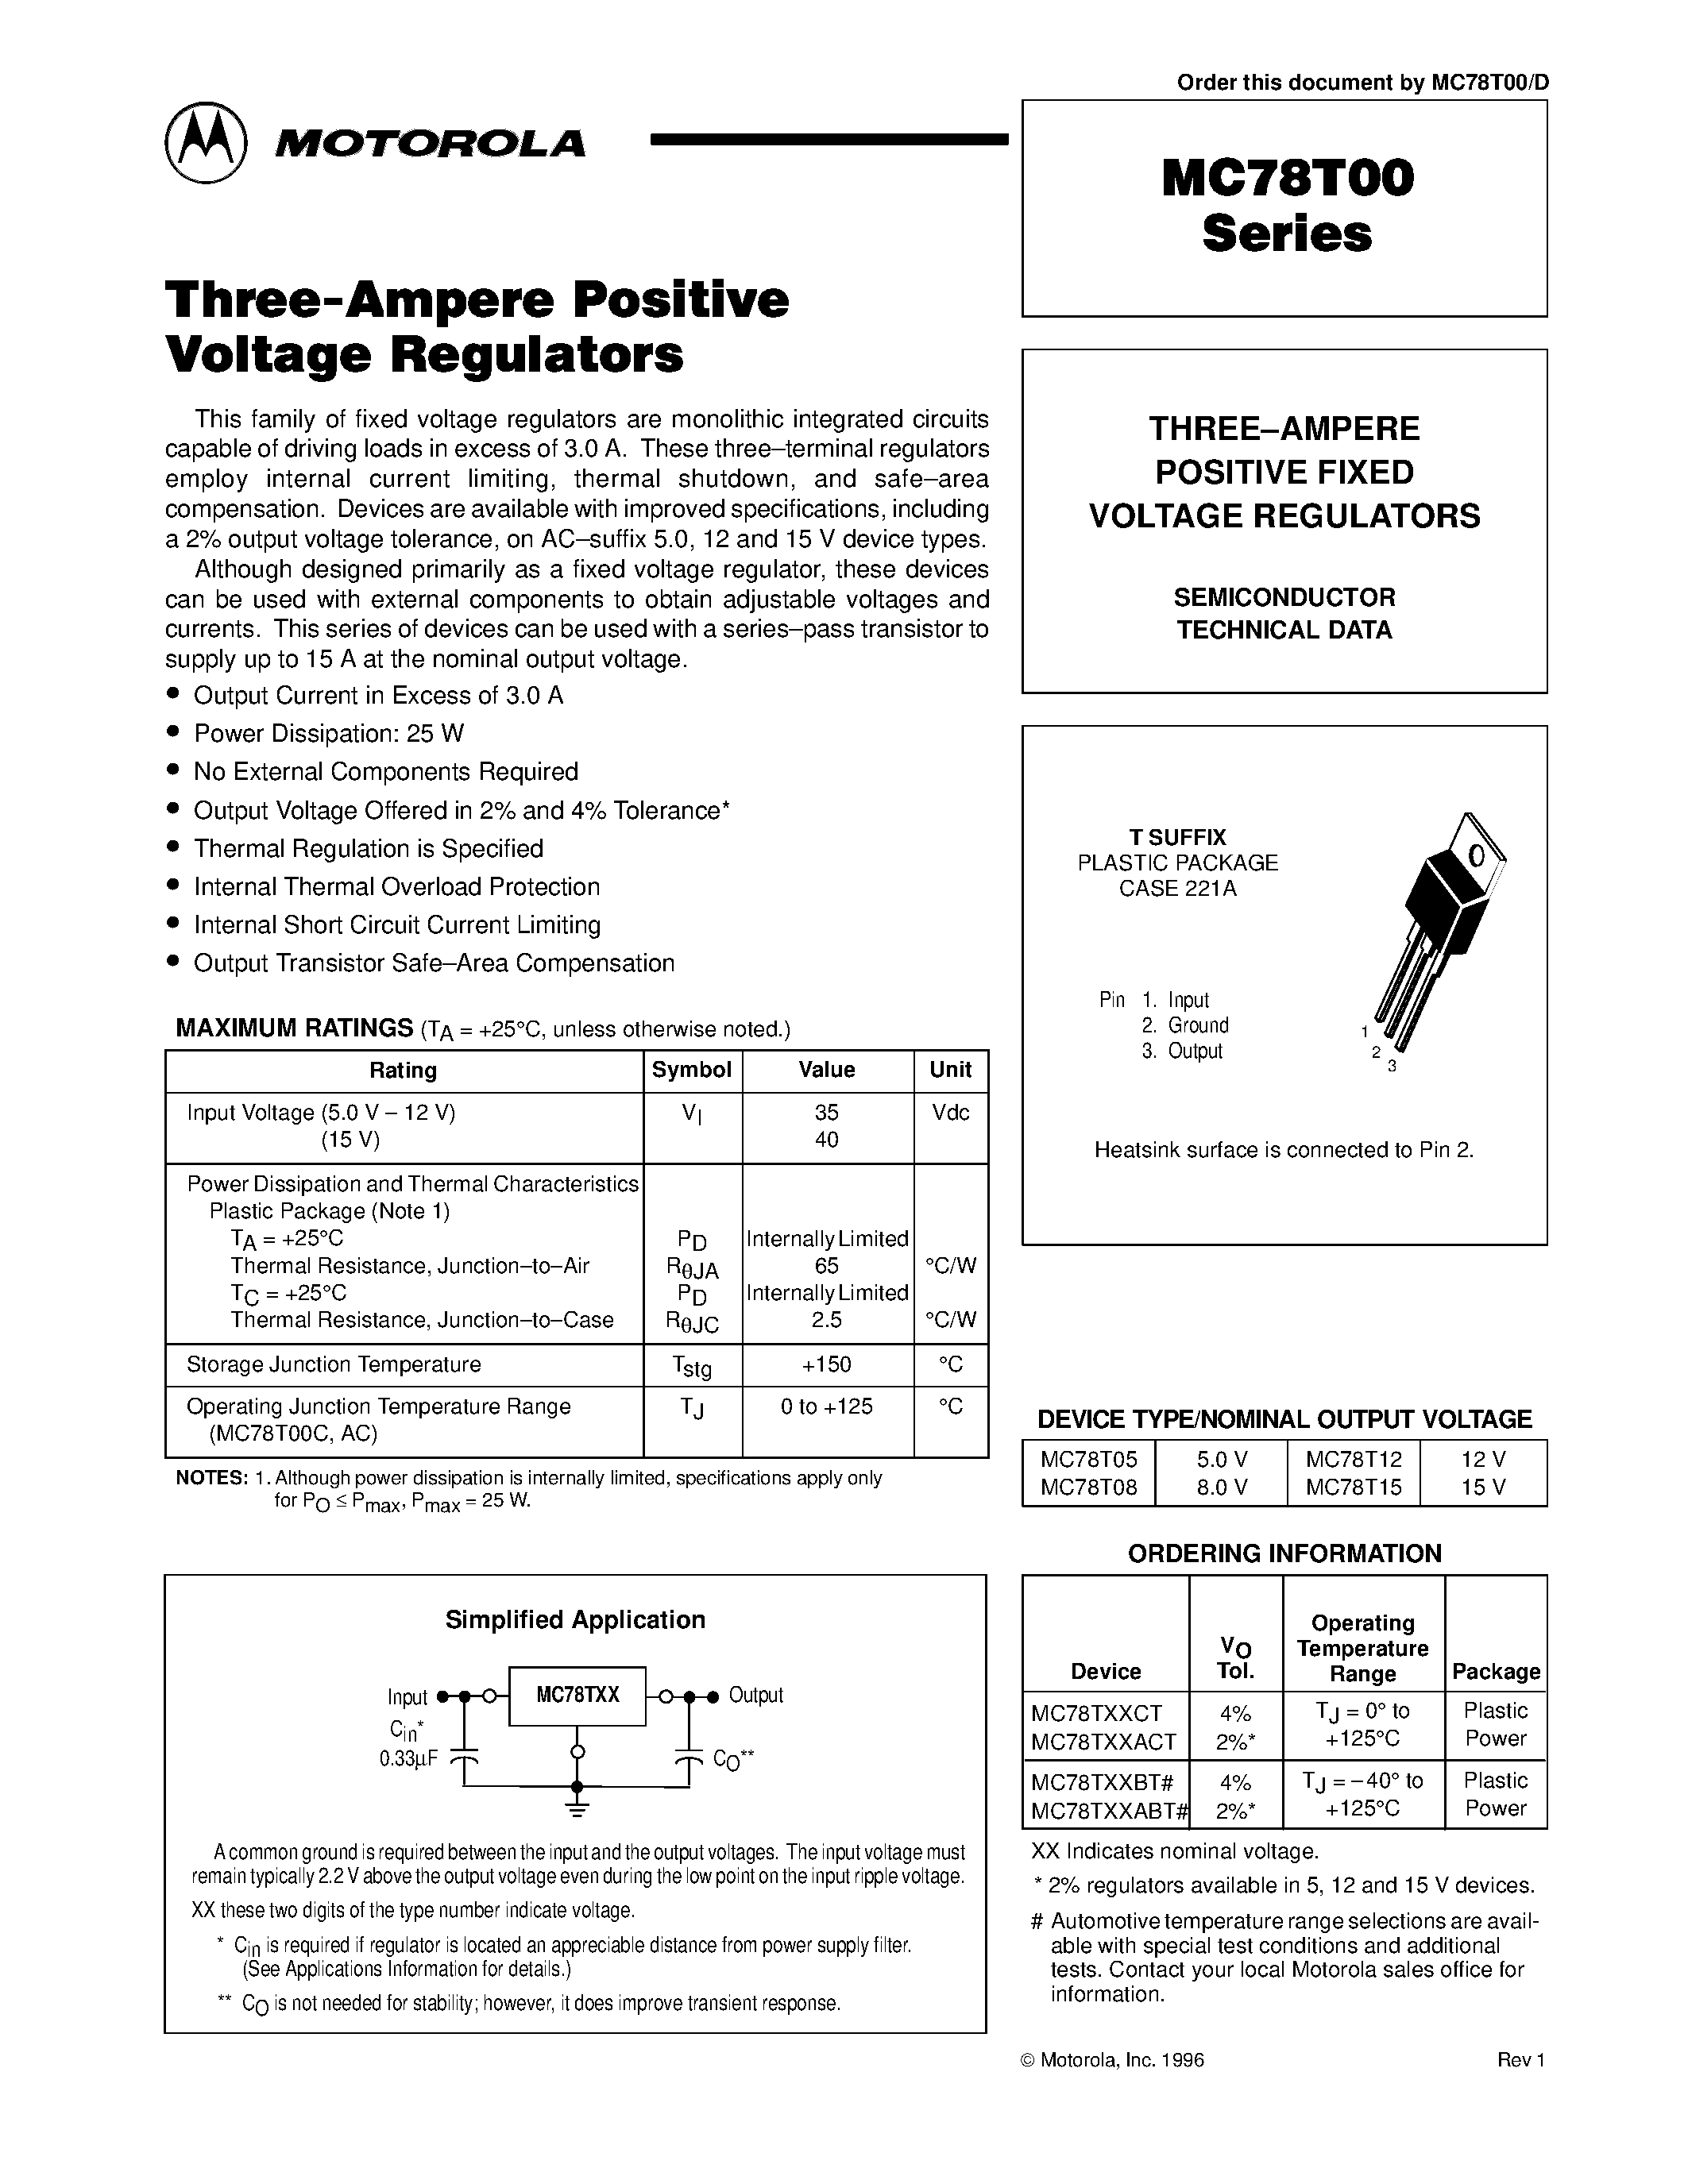 Datasheet MC78T05CT - THREE-AMPERE POSITIVE FIXED VOLTAGE REGULATORS page 1